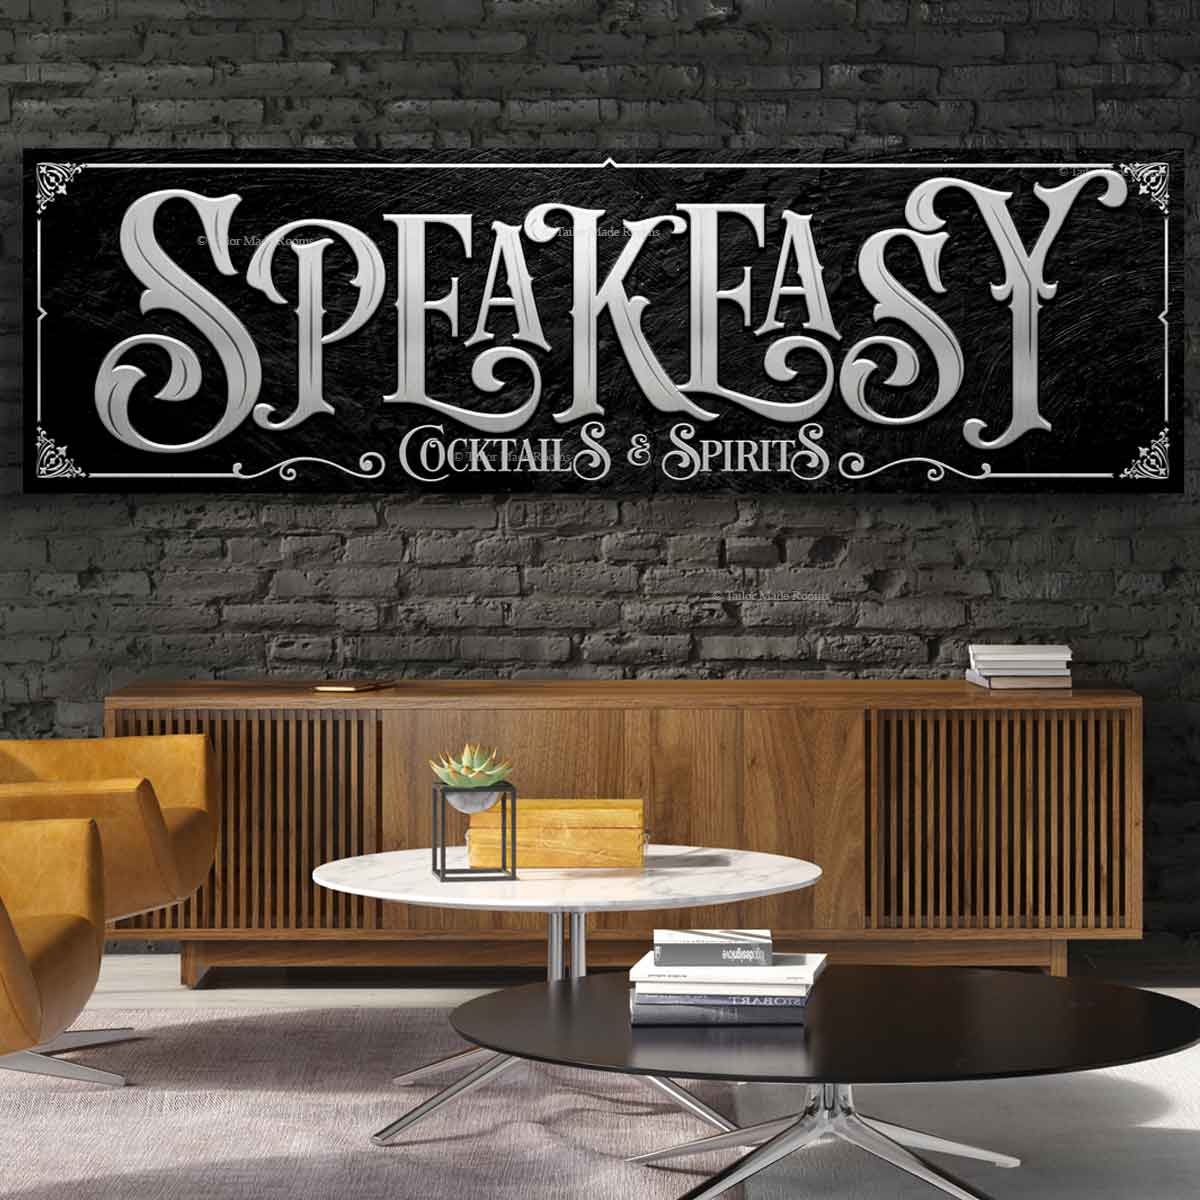 Speakeasy Wall Décor - Elegant Bar Sign for Home